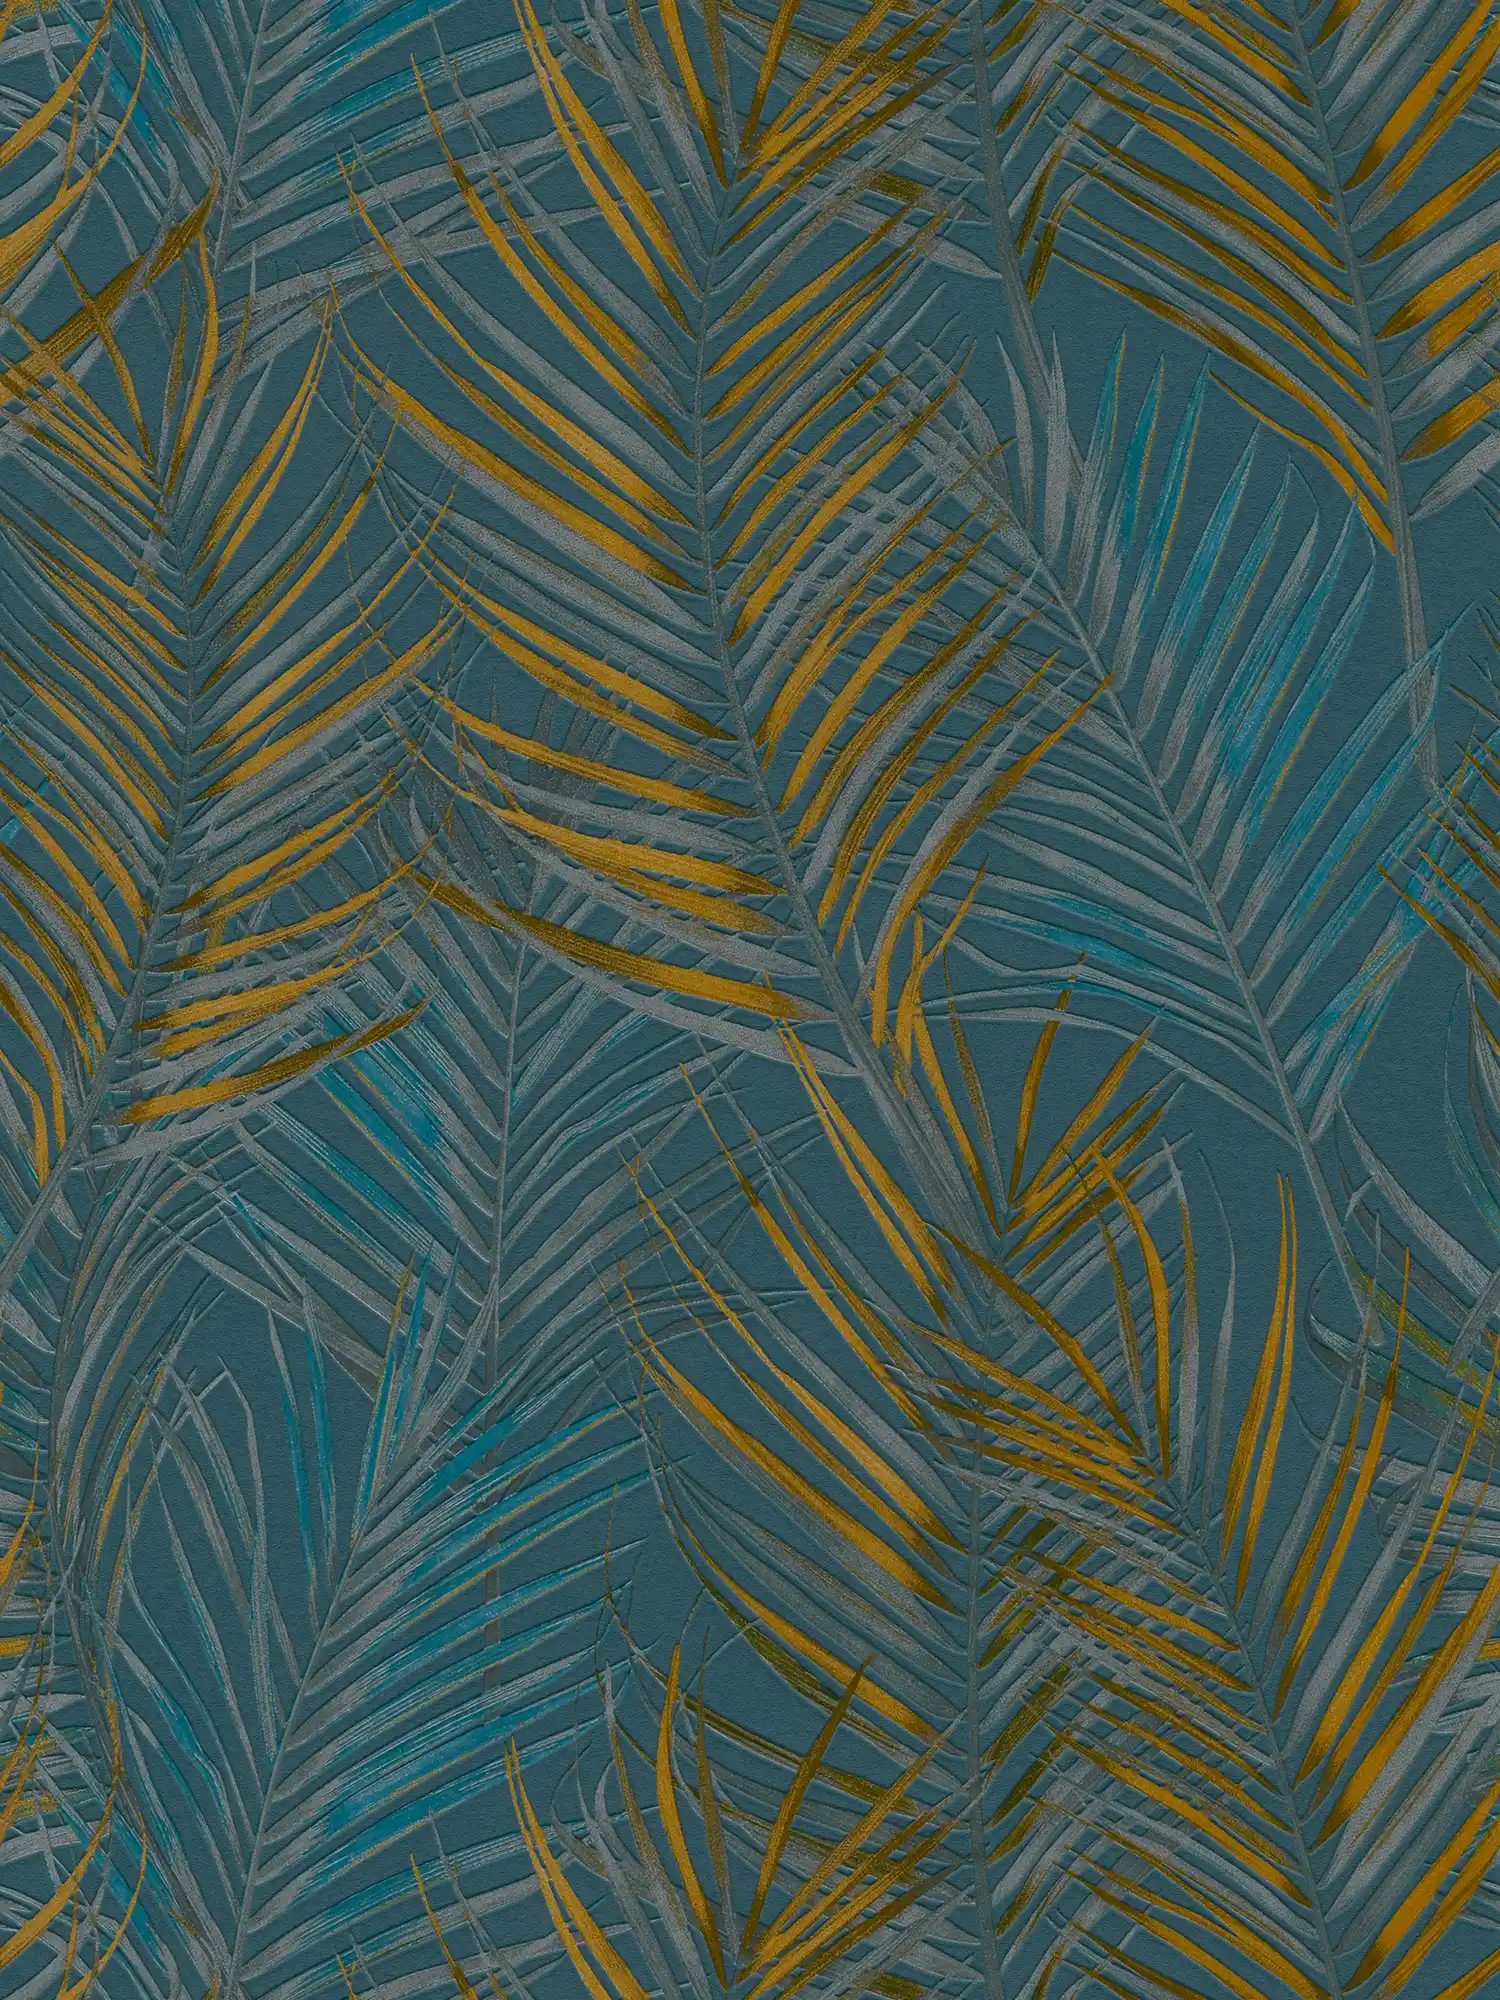 Tapete Dschungel Muster mit Palmenblättern – Blau, Gelb, Petrol
